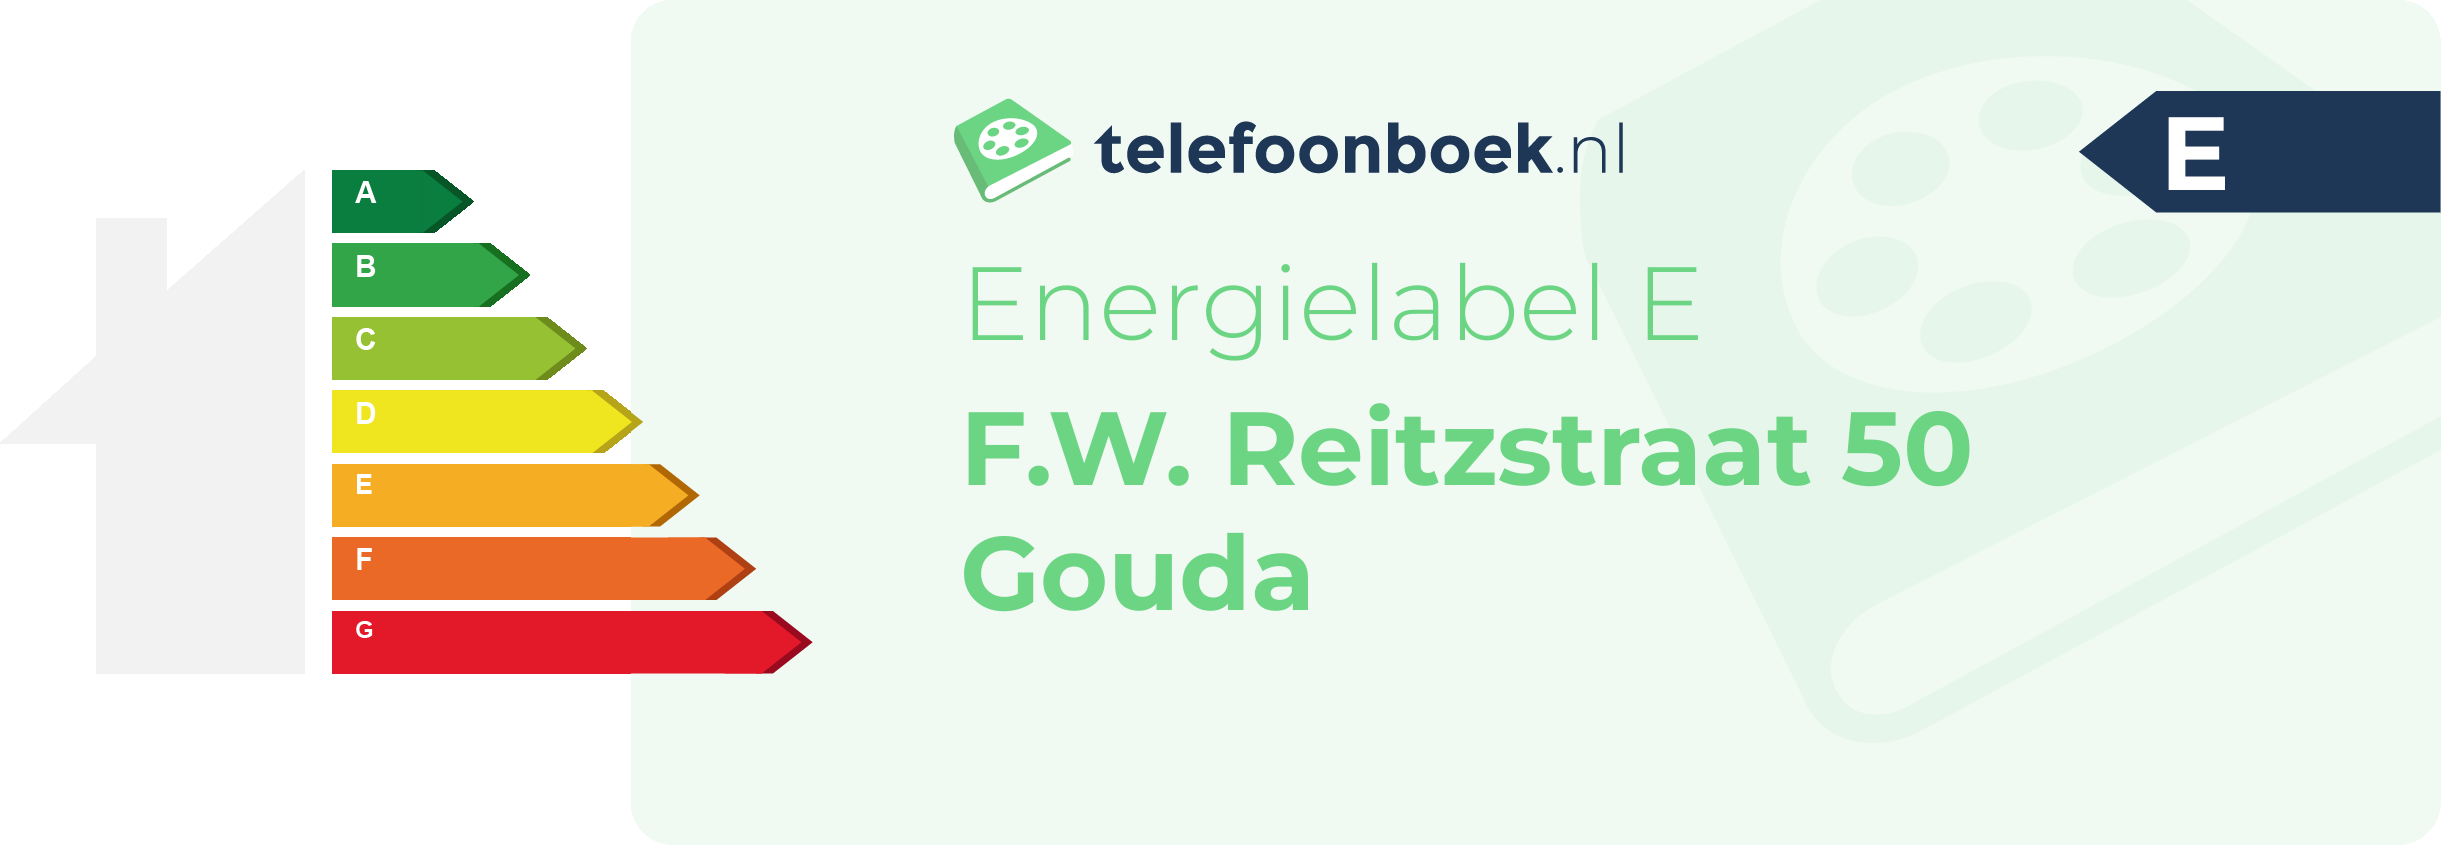 Energielabel F.W. Reitzstraat 50 Gouda